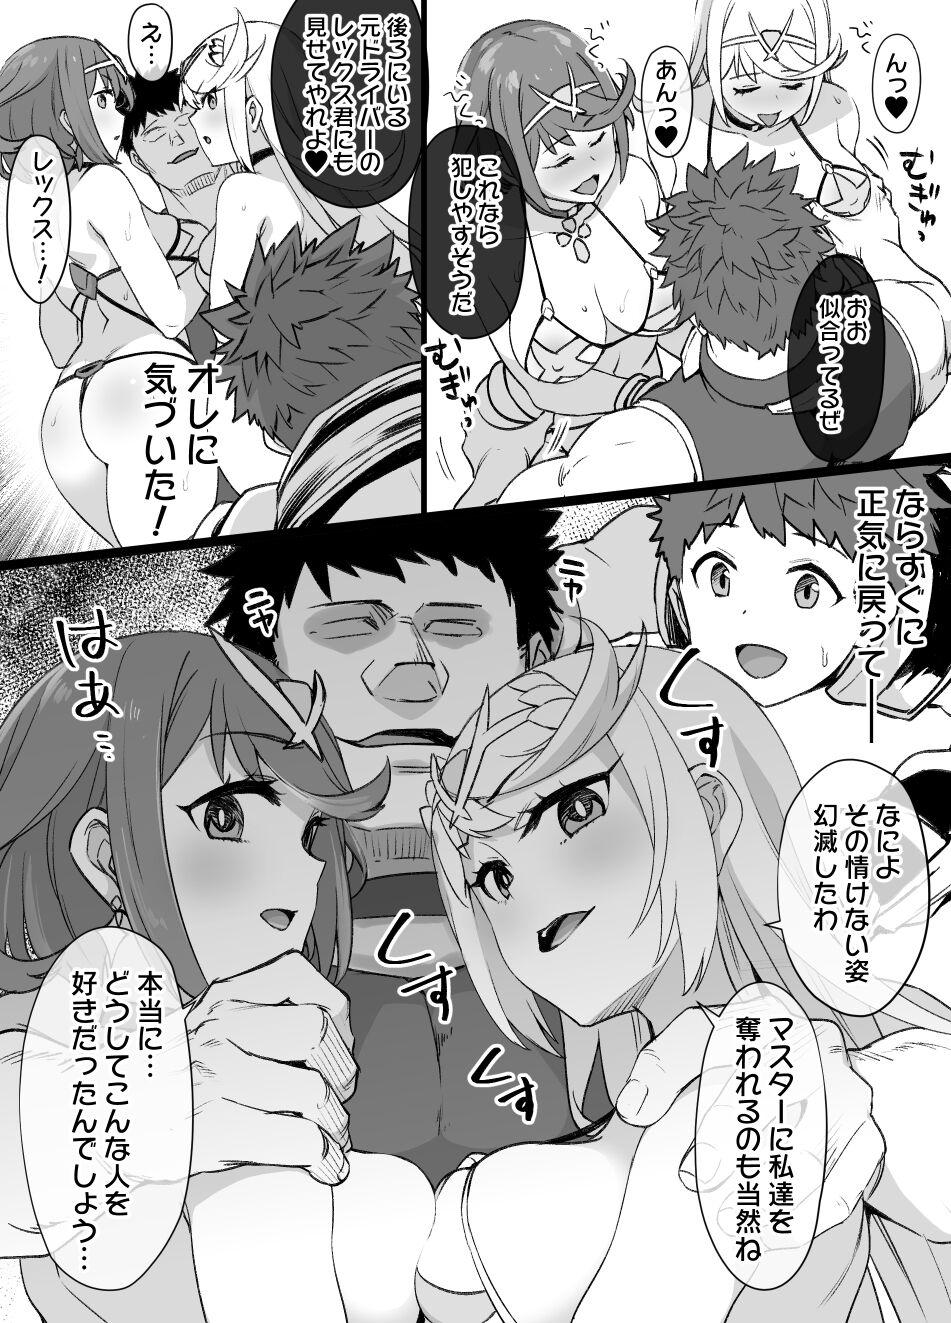 Flaquita Homura & Hikari Sennou NTR Manga 14P - Xenoblade chronicles 2 Pussy Fucking - Page 5